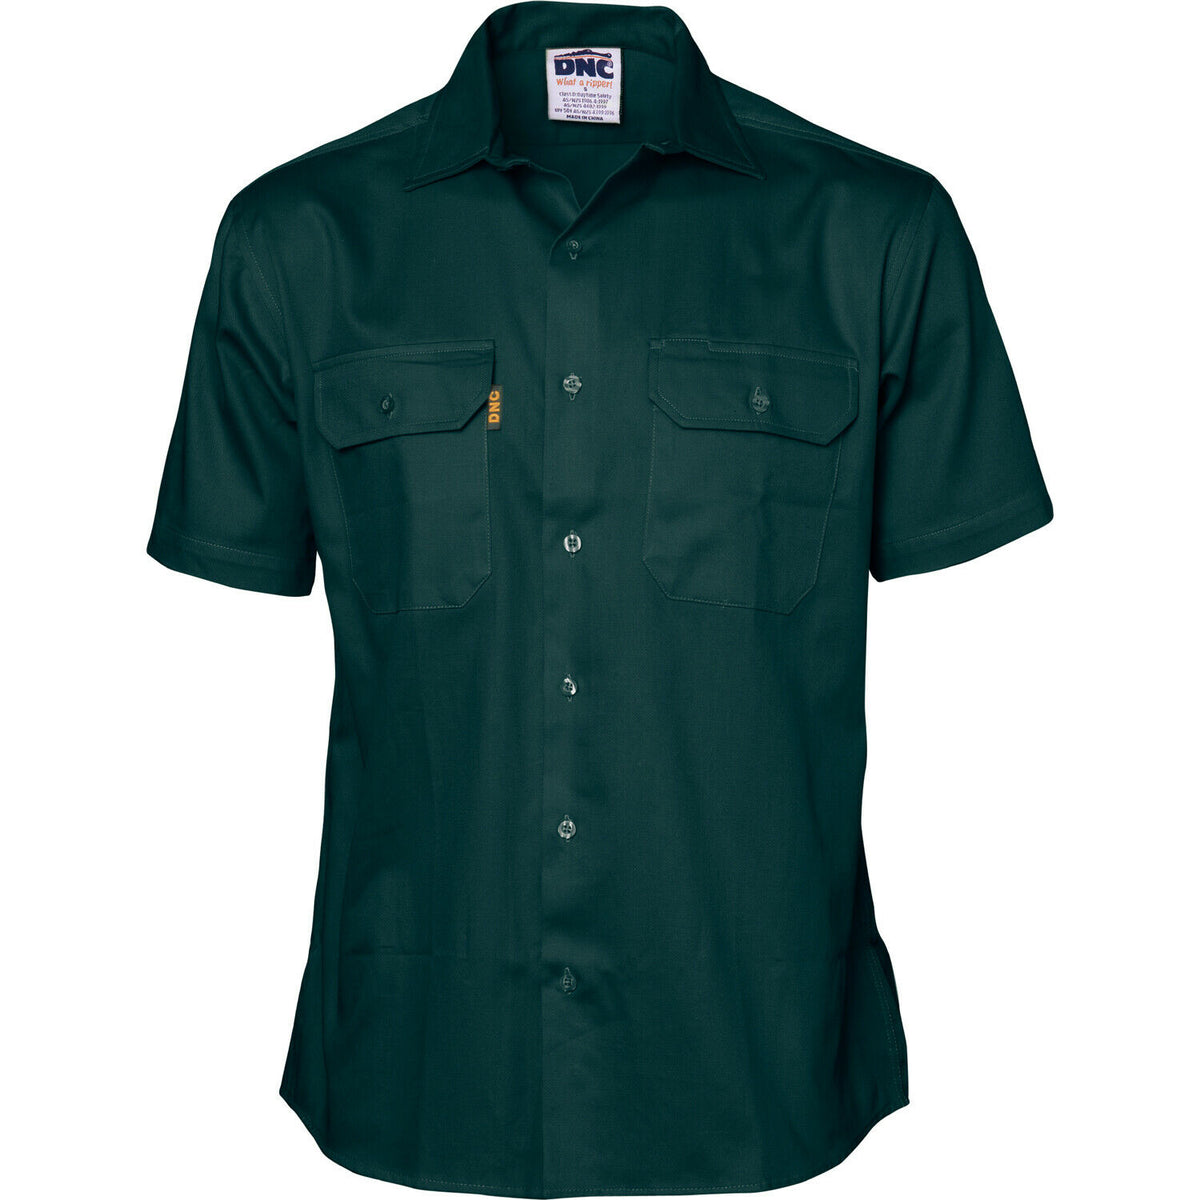 DNC Workwear Mens Cotton Drill Safety Shirt Short Sleeve Comfortable  3201